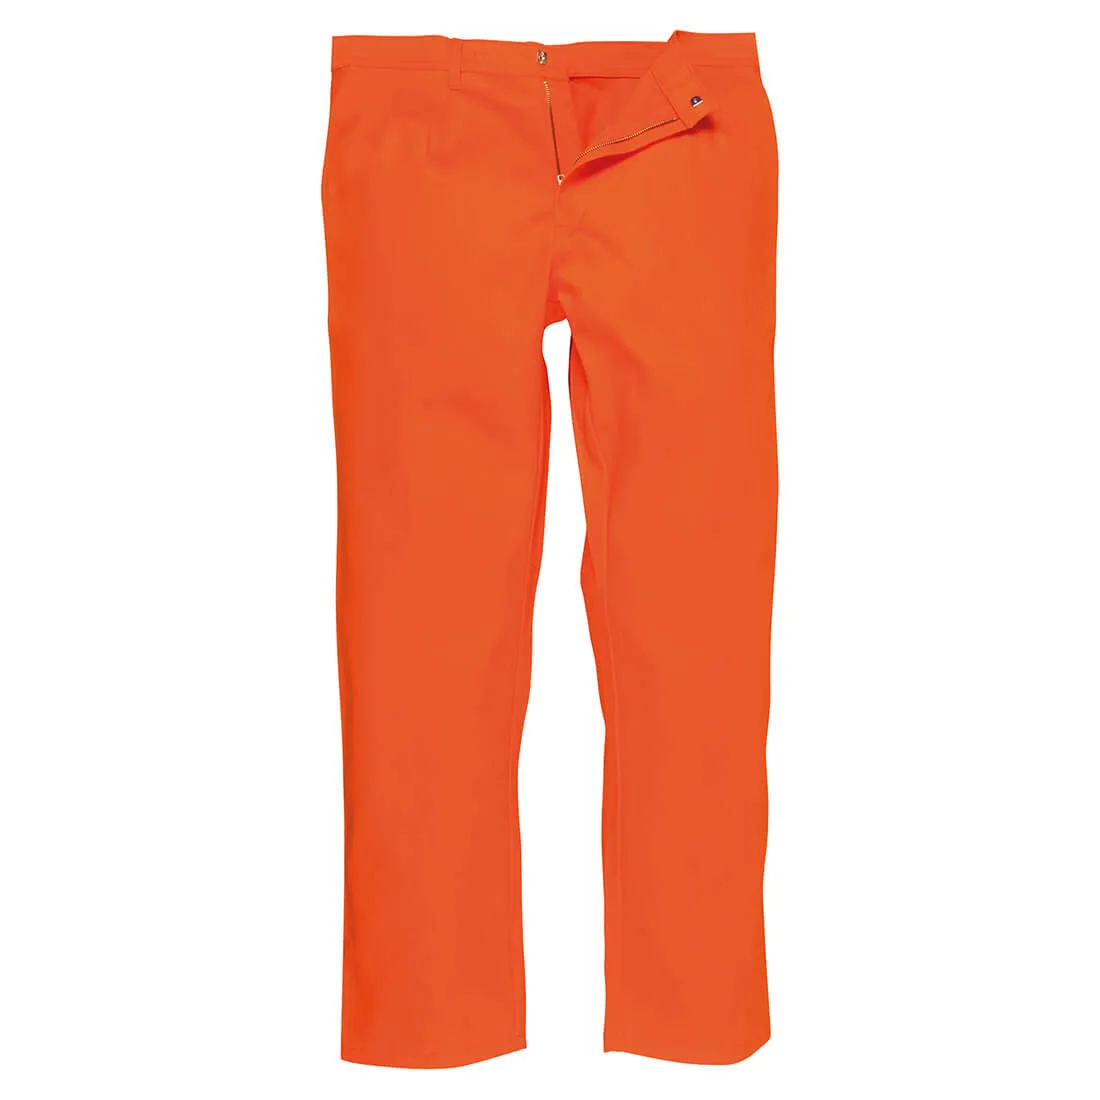 Biz Weld Mens Flame Resistant Trousers - Orange, Extra Large, 32"